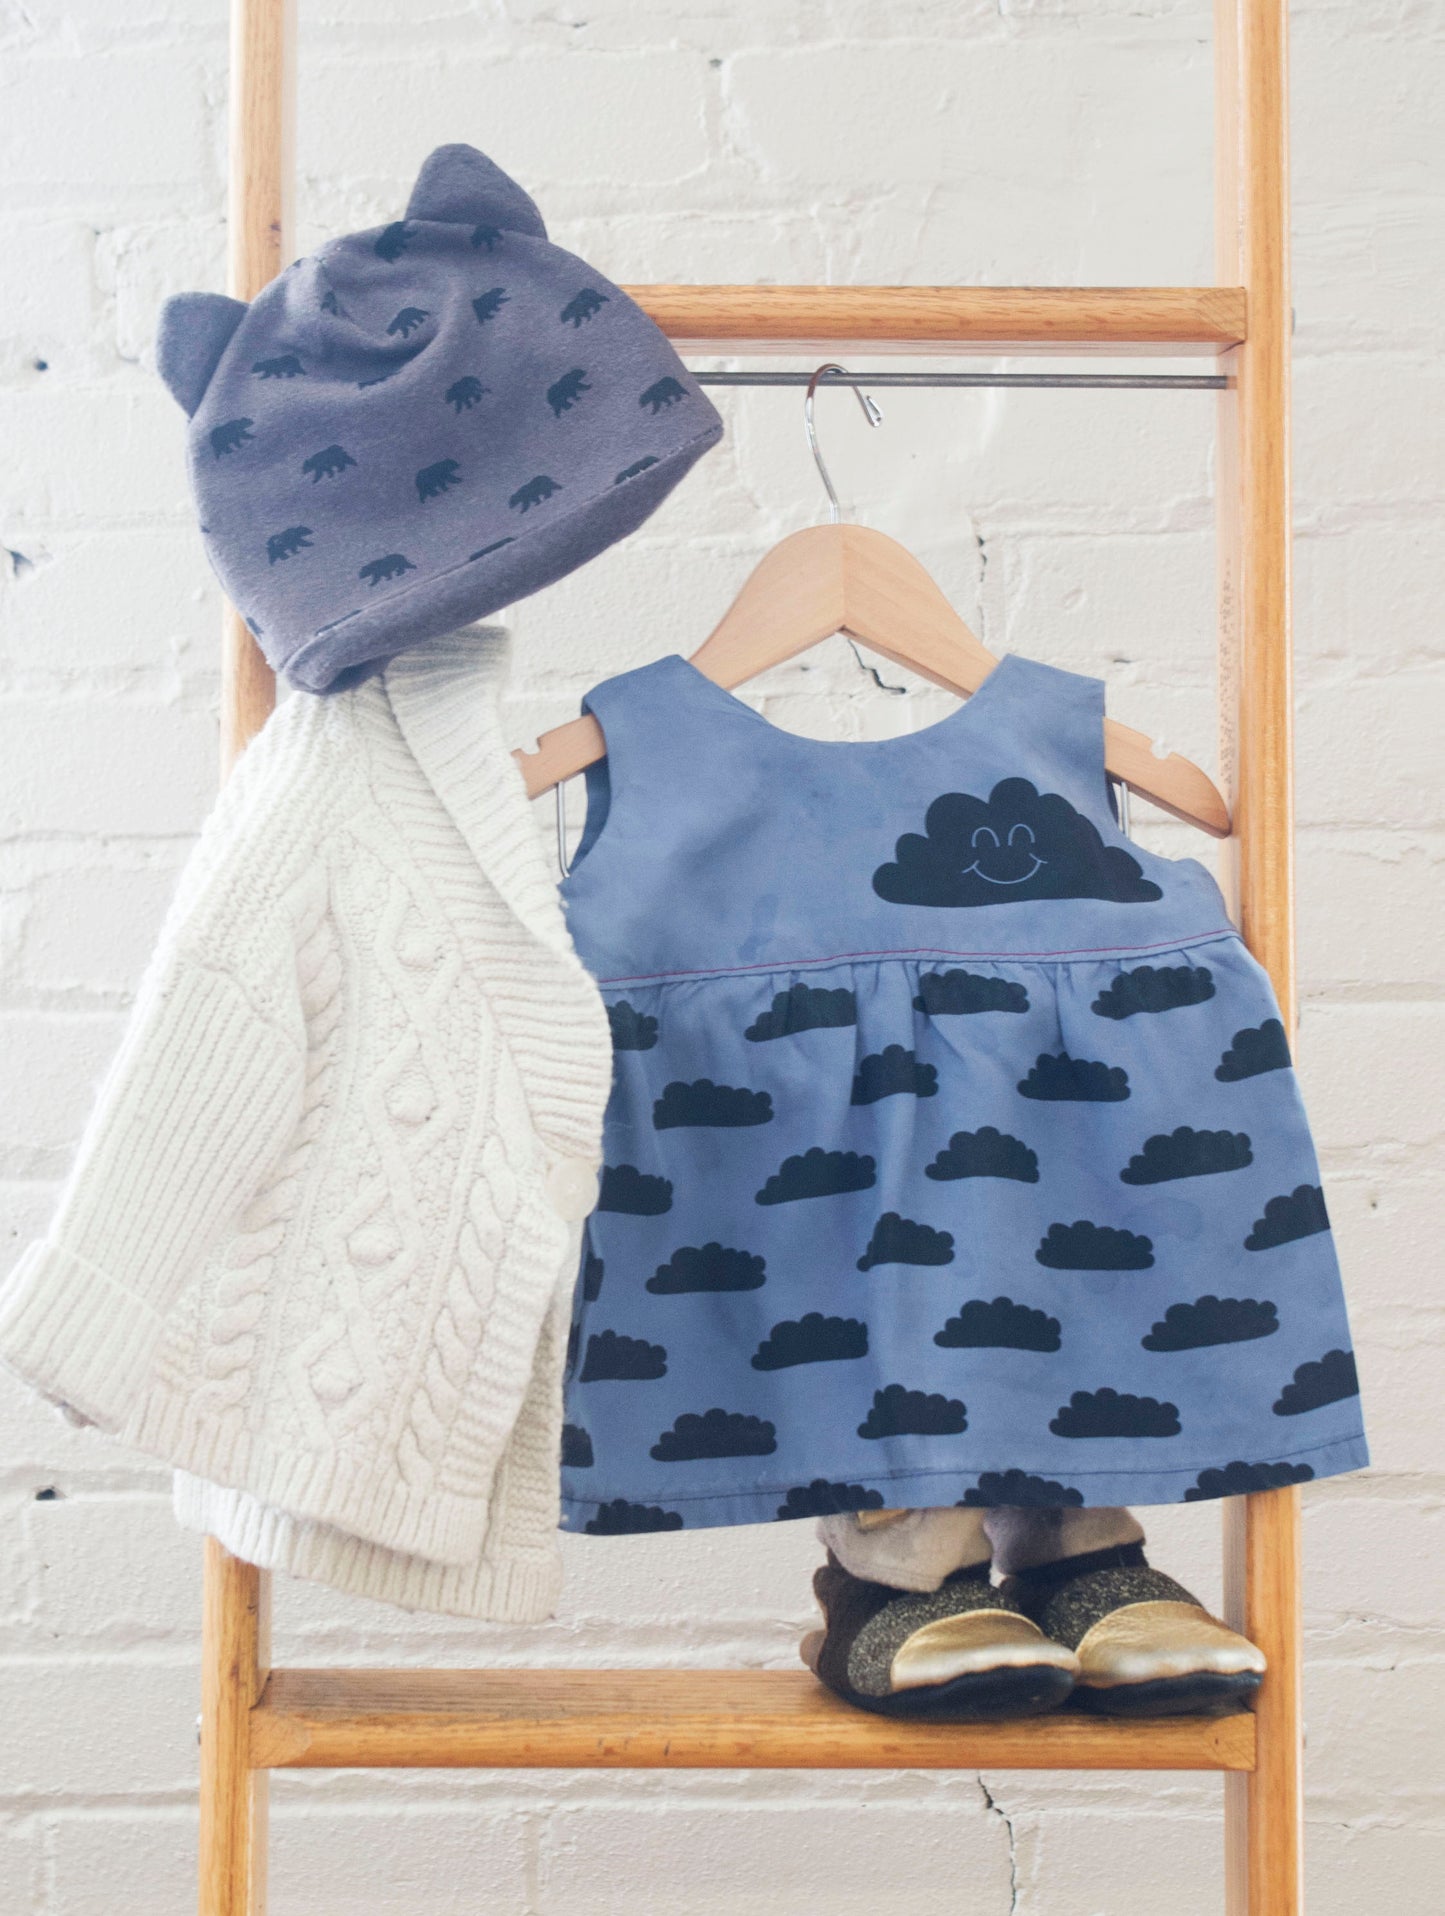 DIY Cloud Dress Sewing Kit